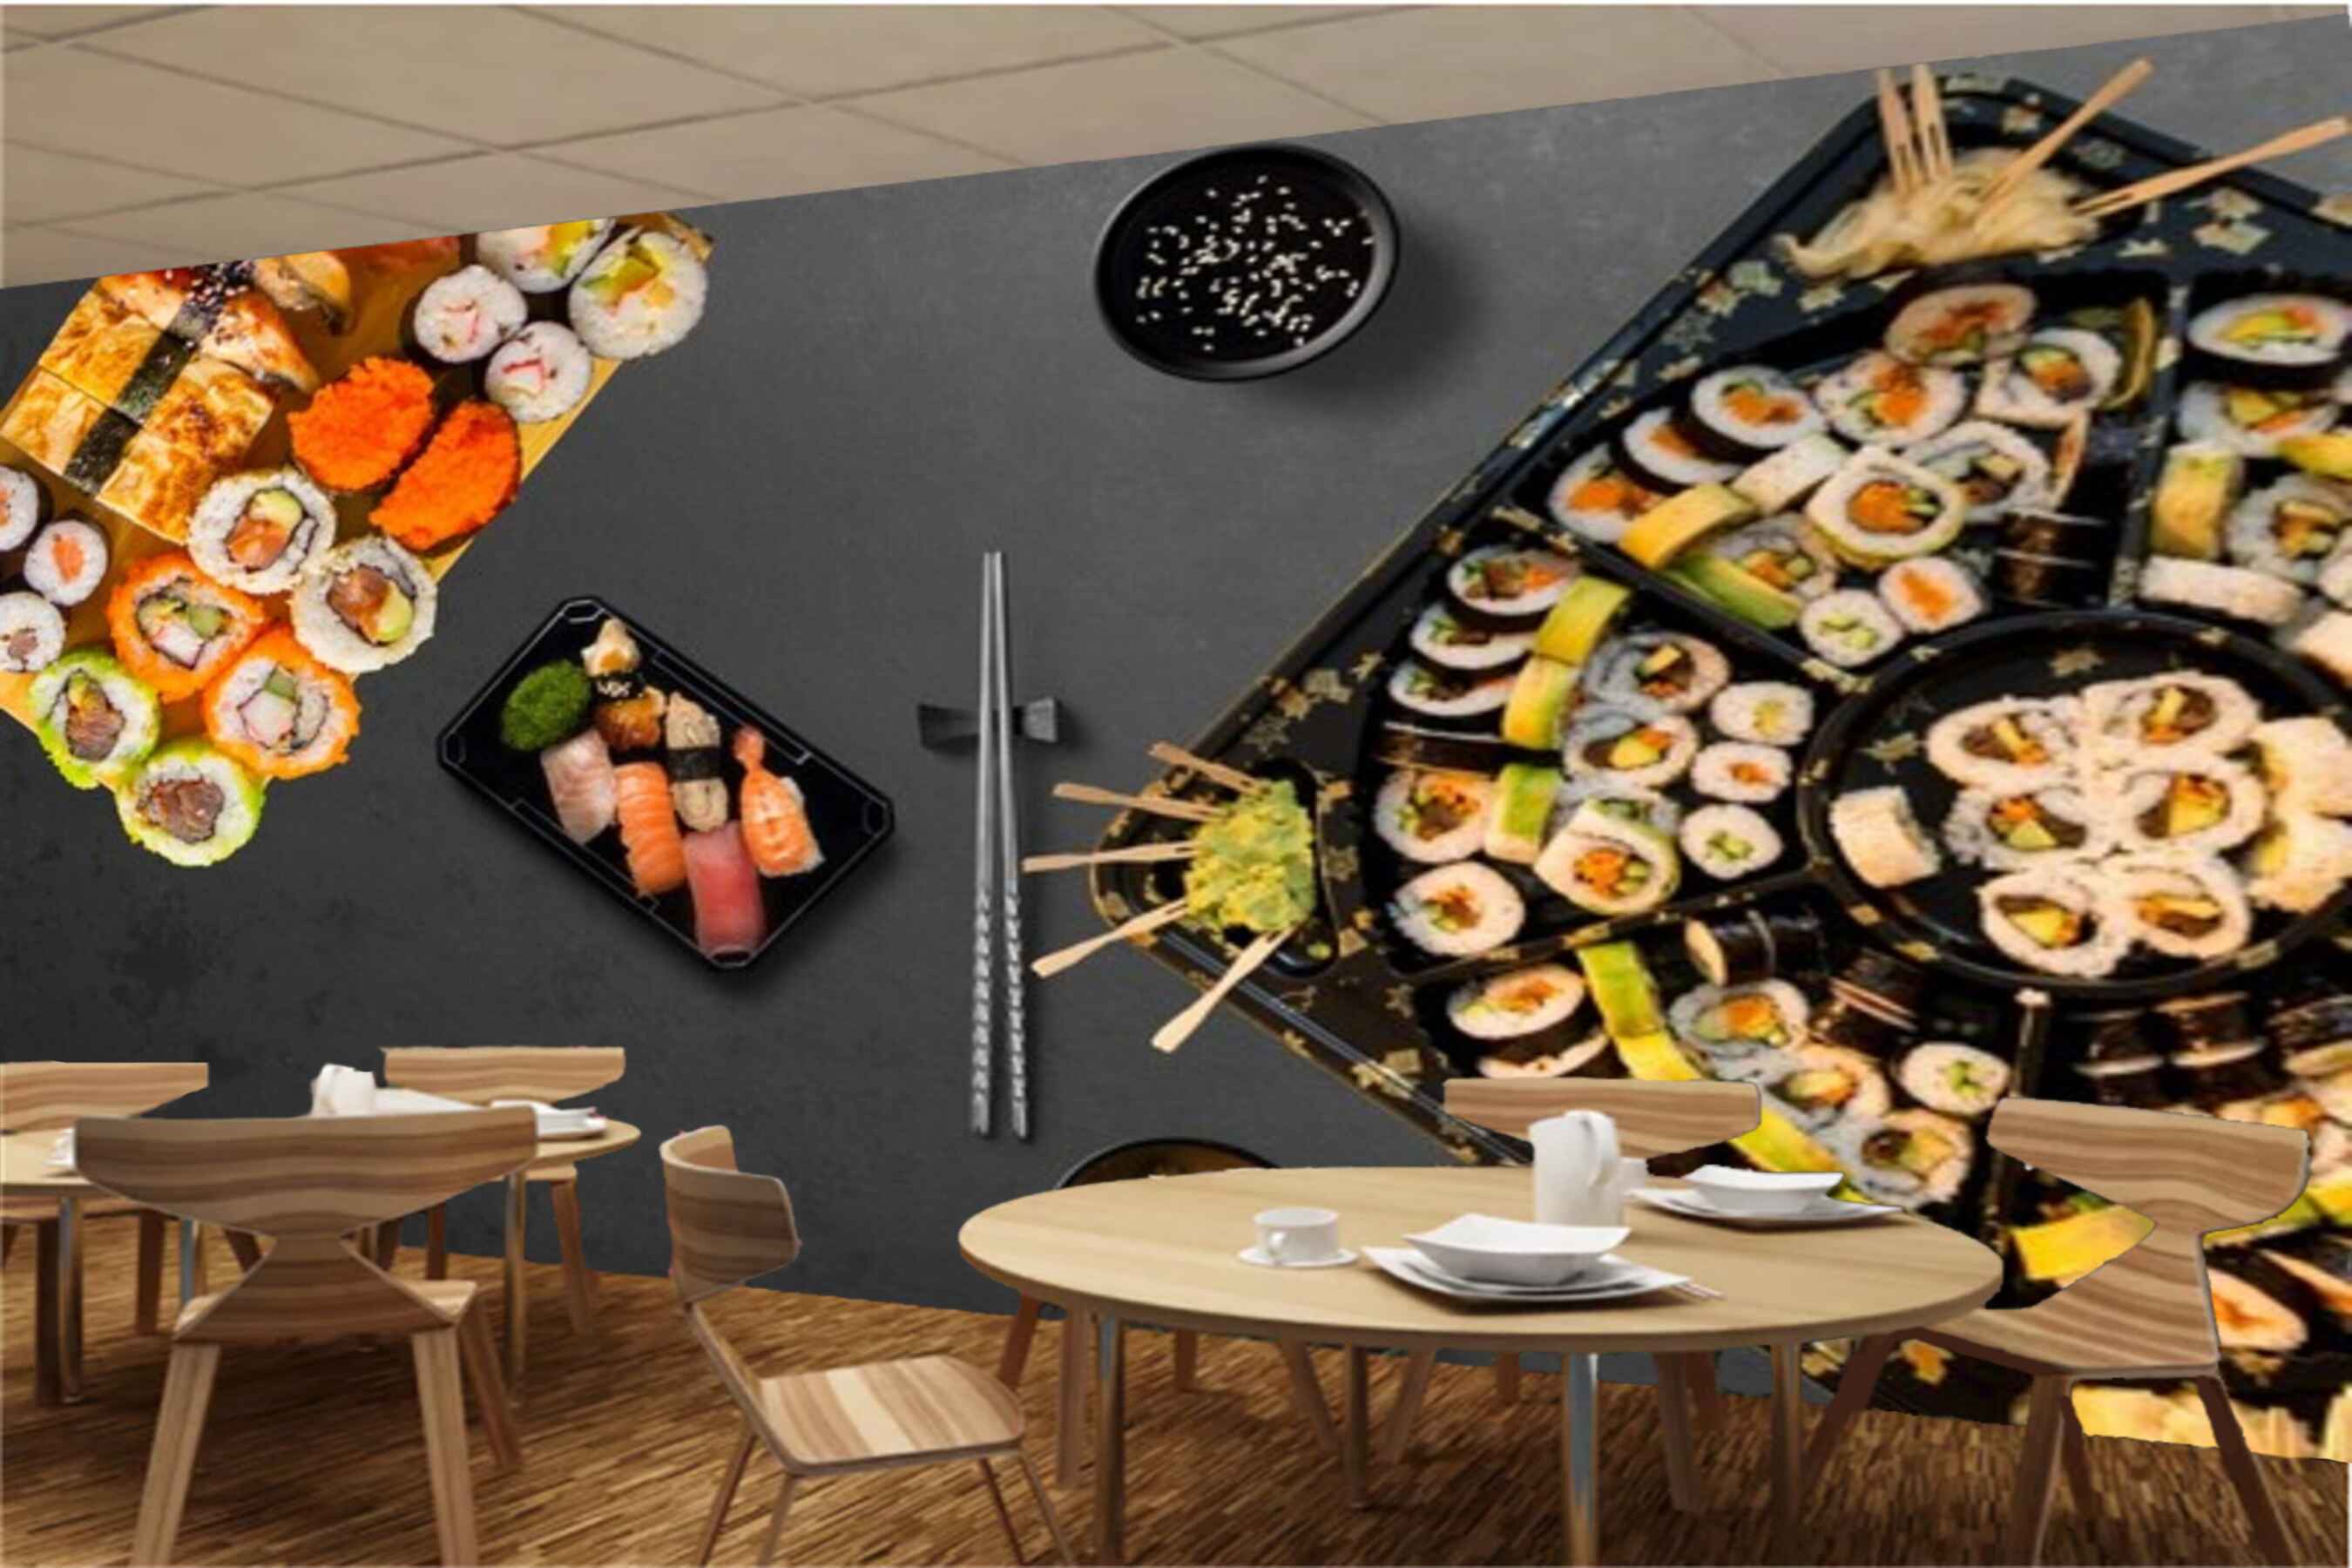 Avikalp MWZ3176 Food Items Tea Drinks HD Wallpaper for Cafe Restaurant